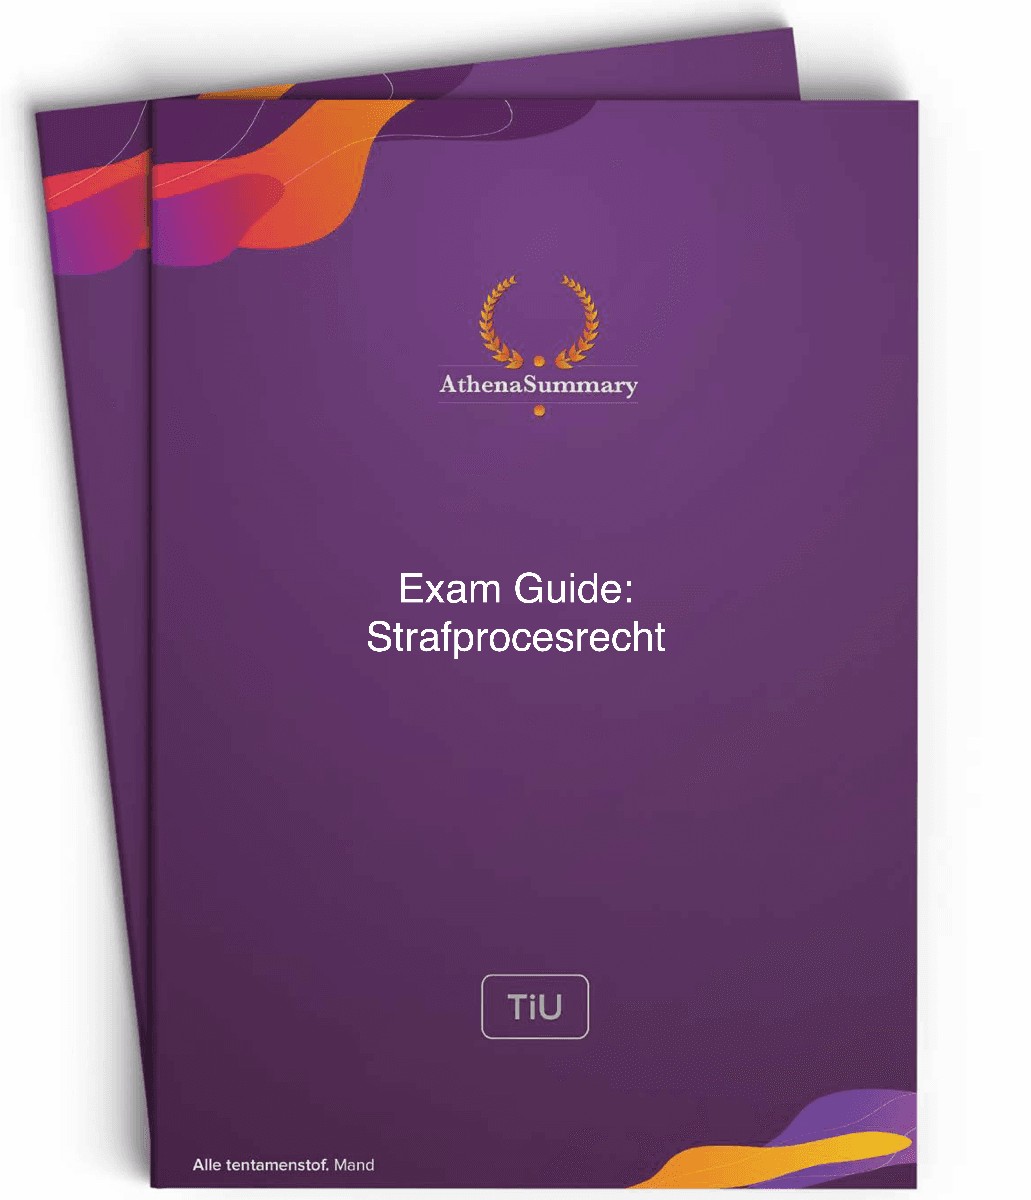 Exam Guide Strafprocesrecht